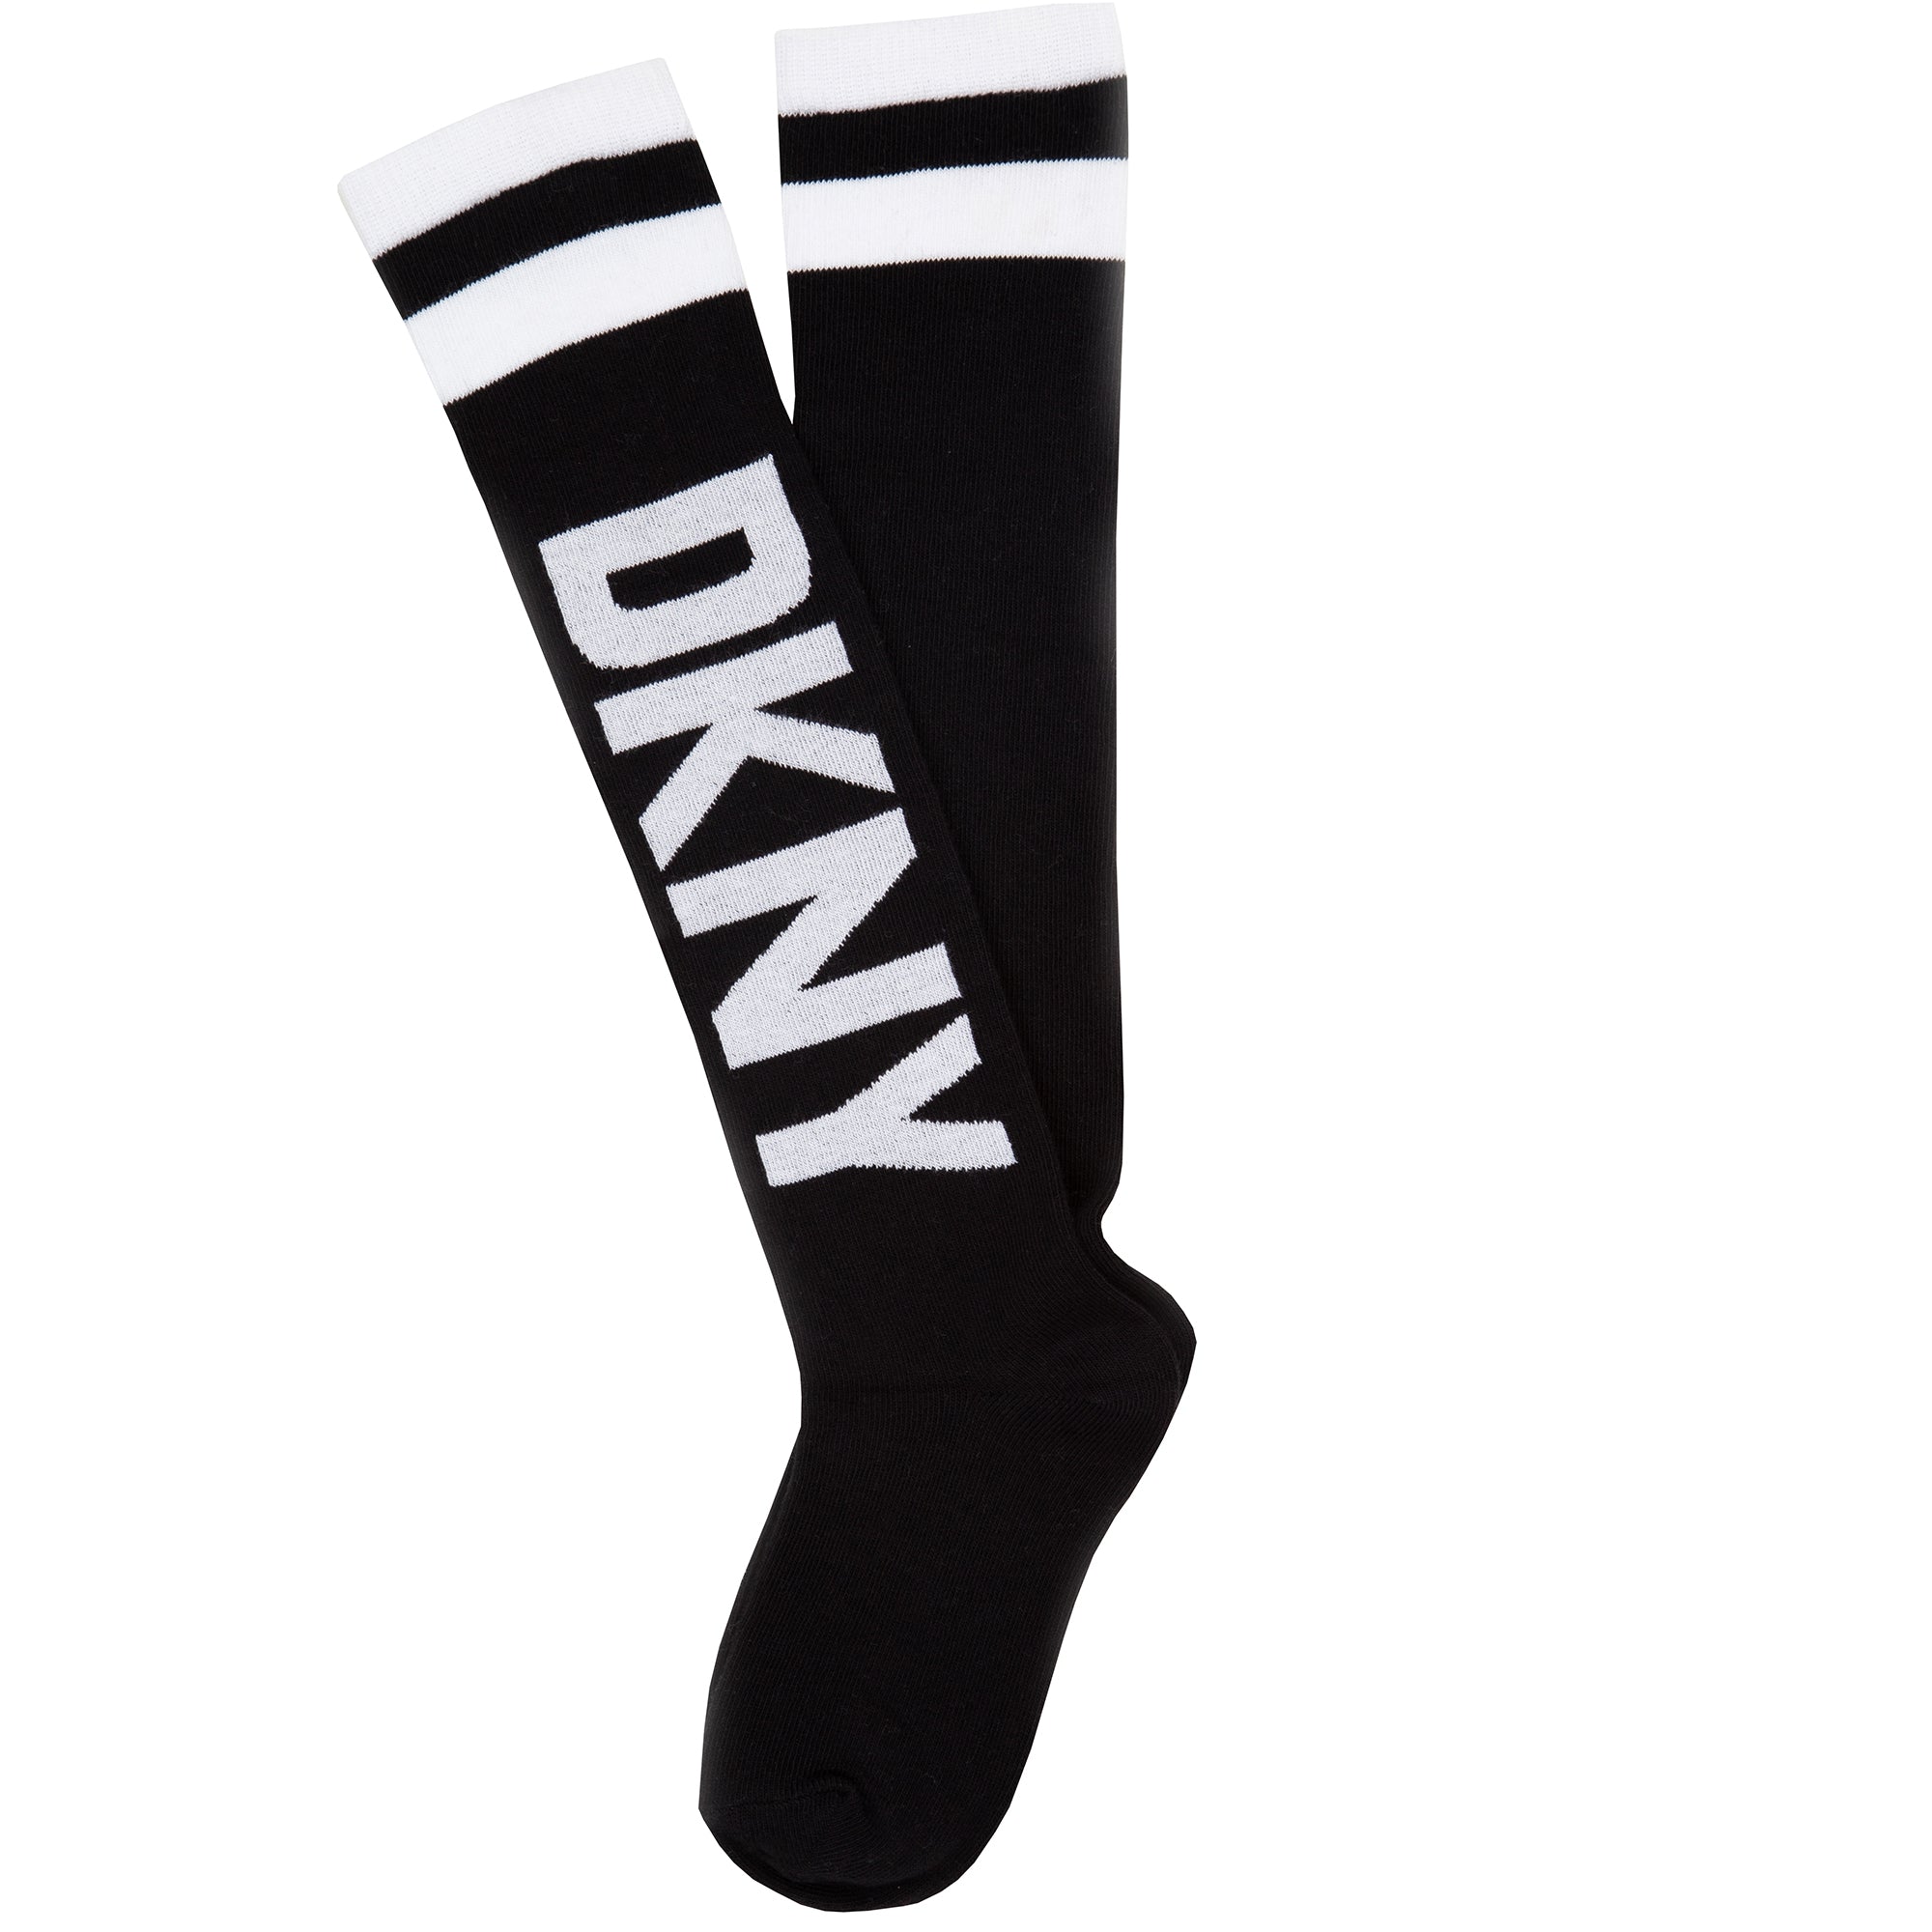 DKNY Black and White Socks